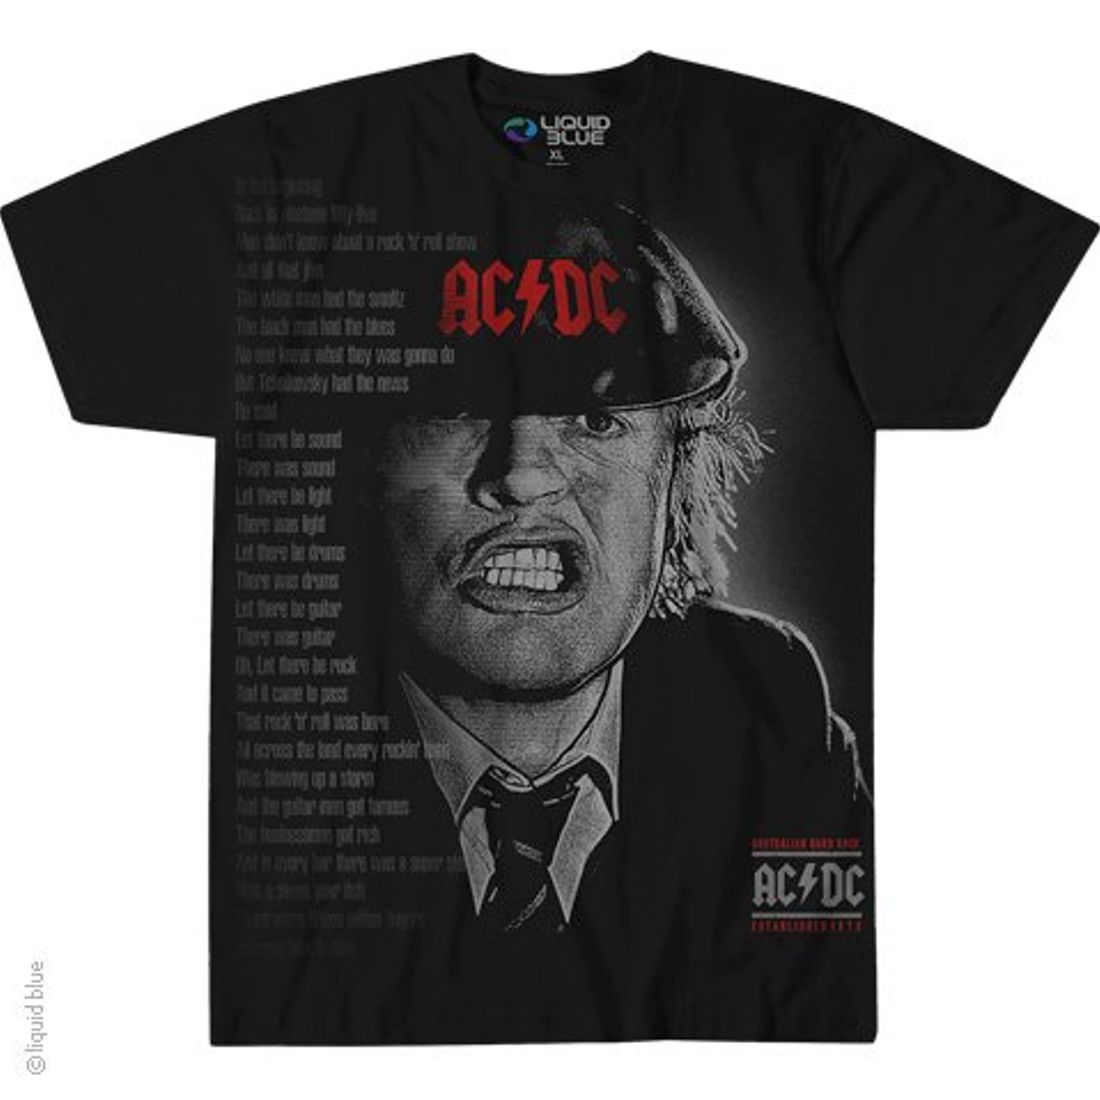 Liquid Blue T-Shirt - AC/DC - Big Face Angus Young